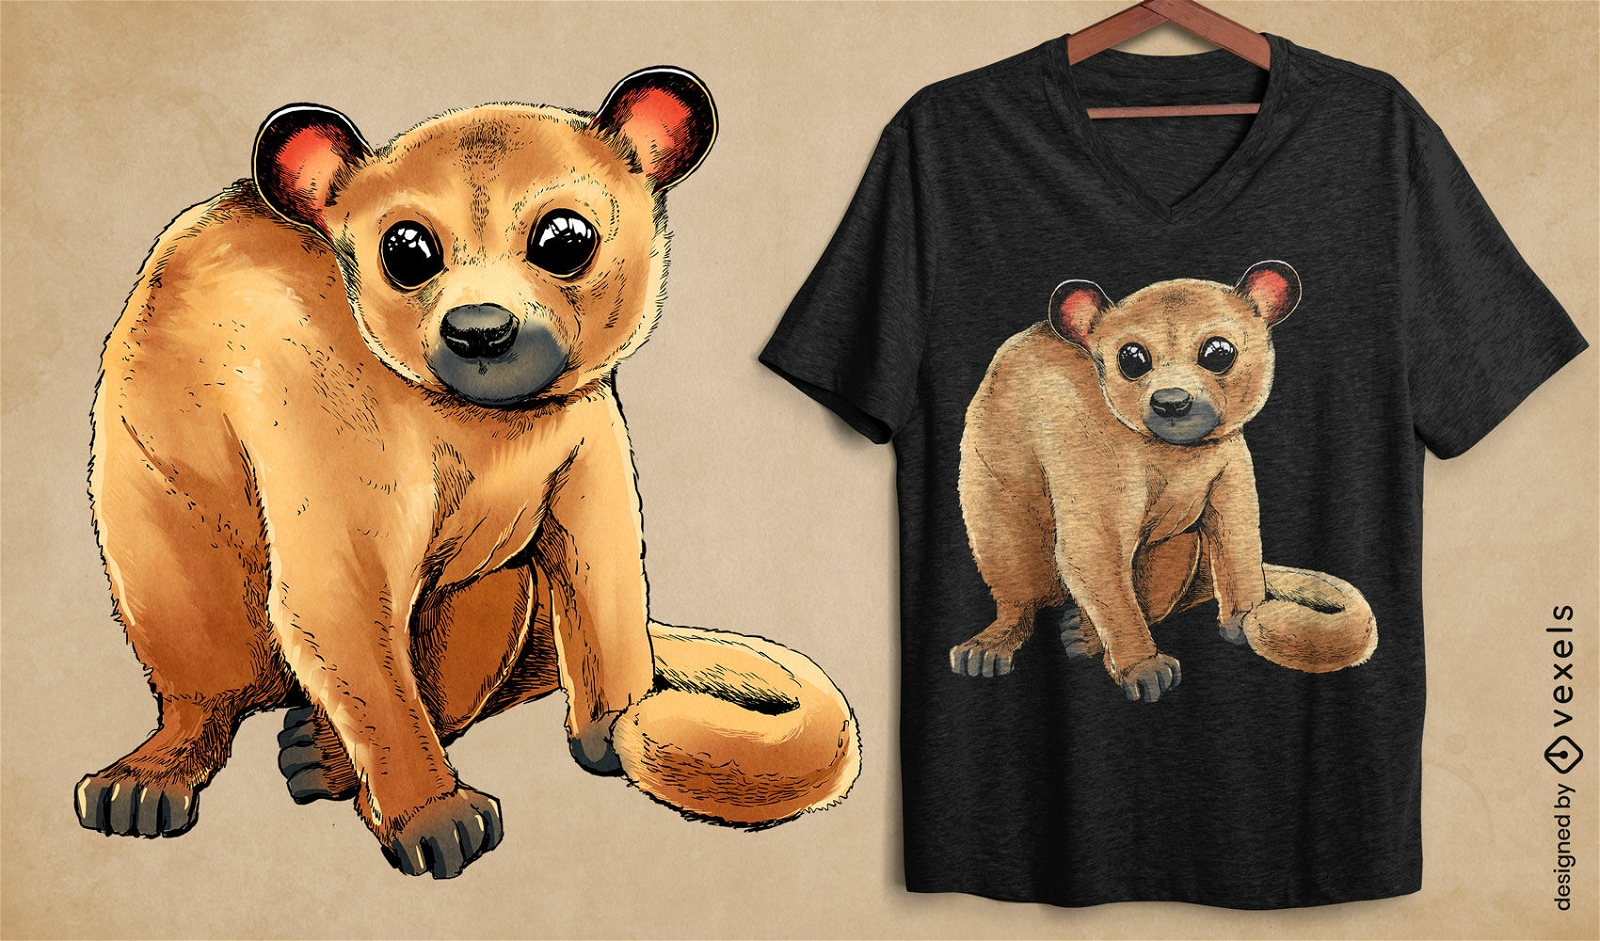 Kinkajou animal t-shirt design